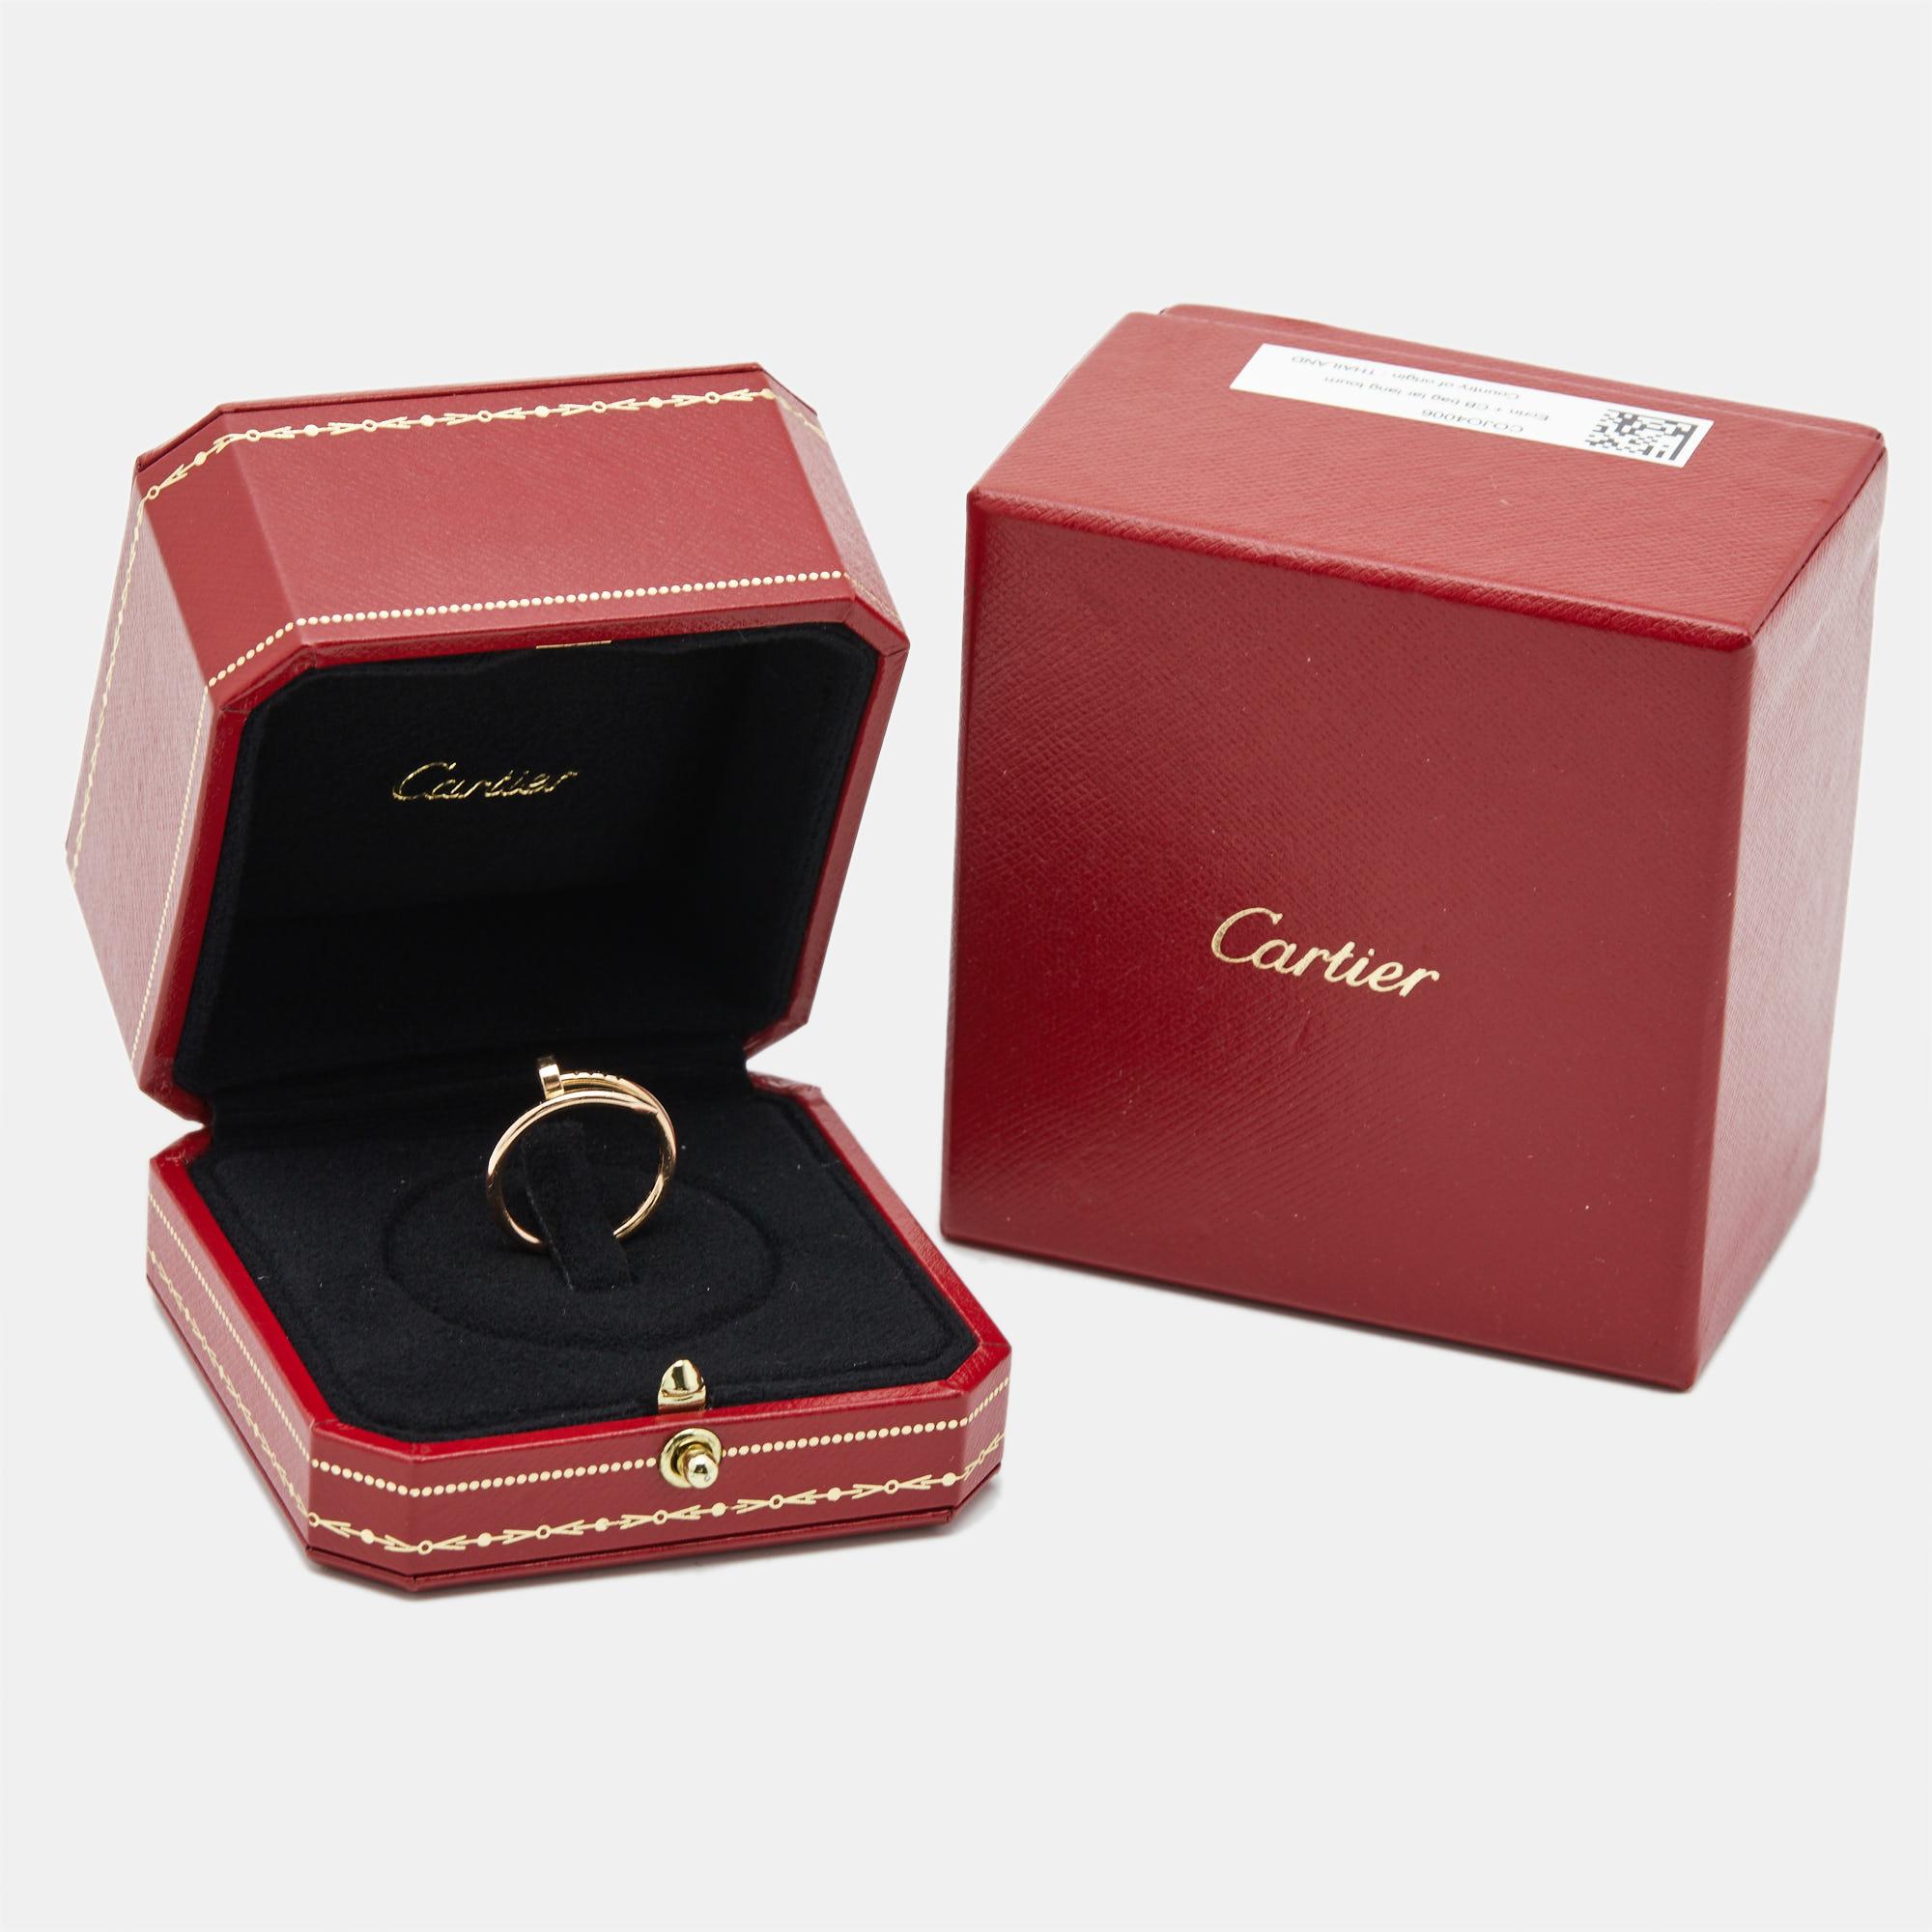 Cartier Juste Un Clou 18k Roségold Kleiner Modell Ring Größe 52 im Angebot 3